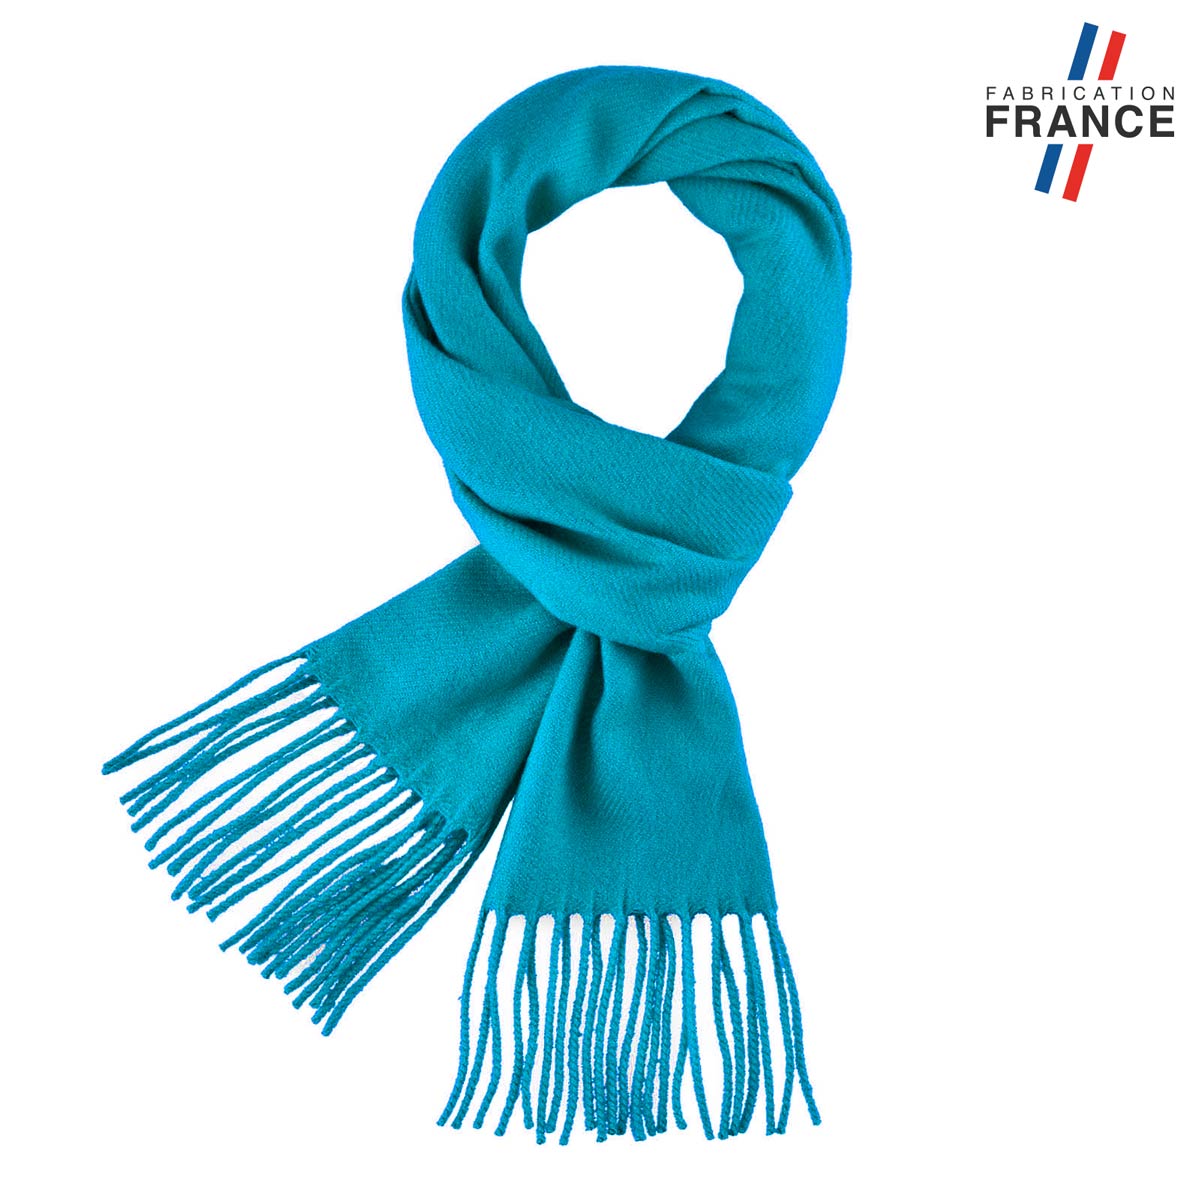 AT-06583_F12-1FR_Echarpe-franges-bleu-turquoise-fabrication-francaise